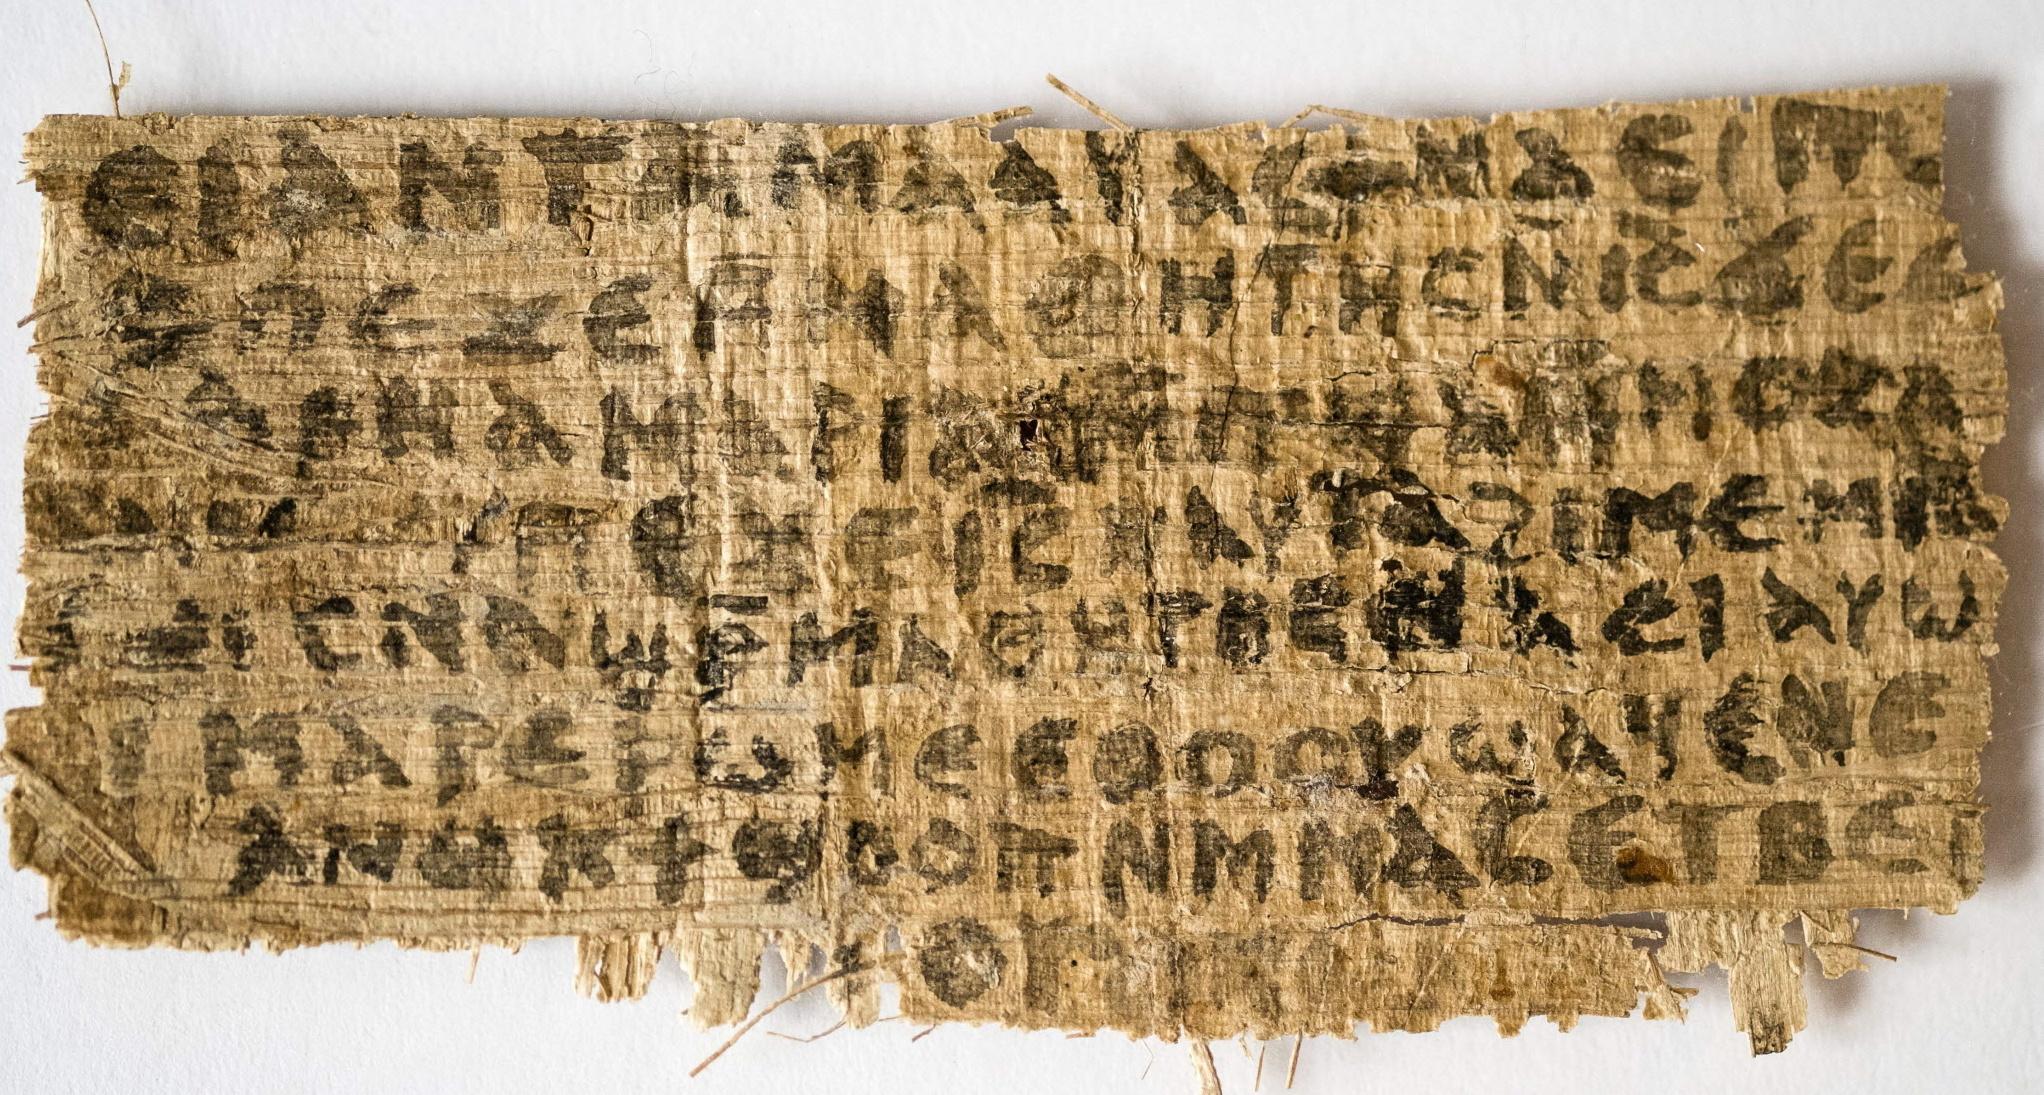 El papiro copto sobre “María, esposa de Jesús” ¿Verdadero o Falso?